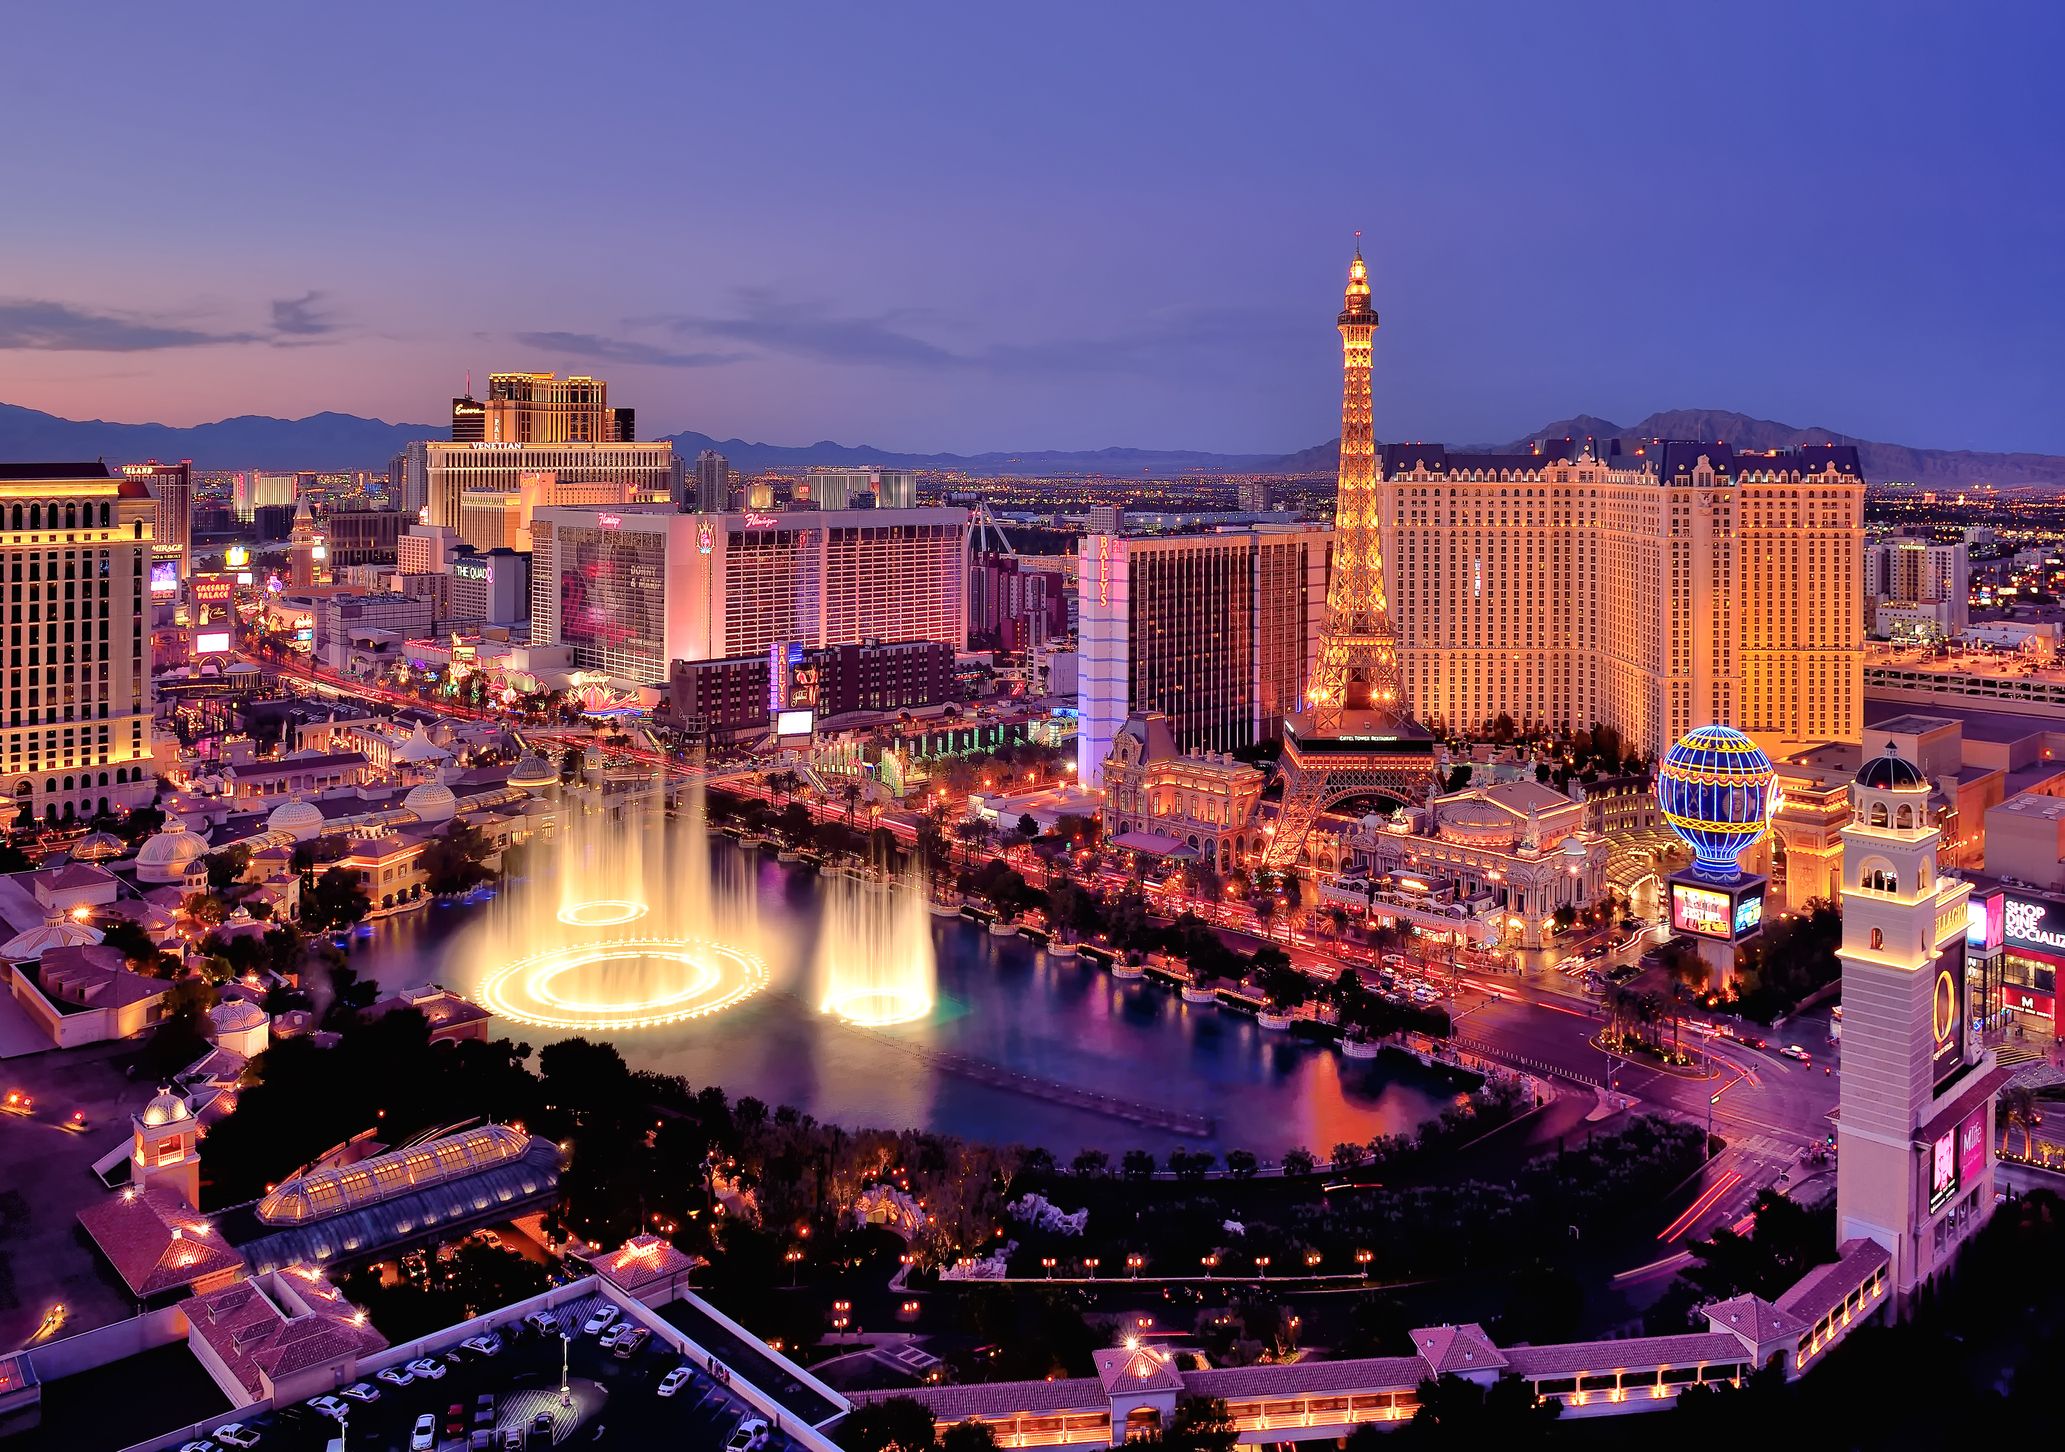 Bellagio Hotel, luxury hotels & resorts in Las Vegas, Nevada